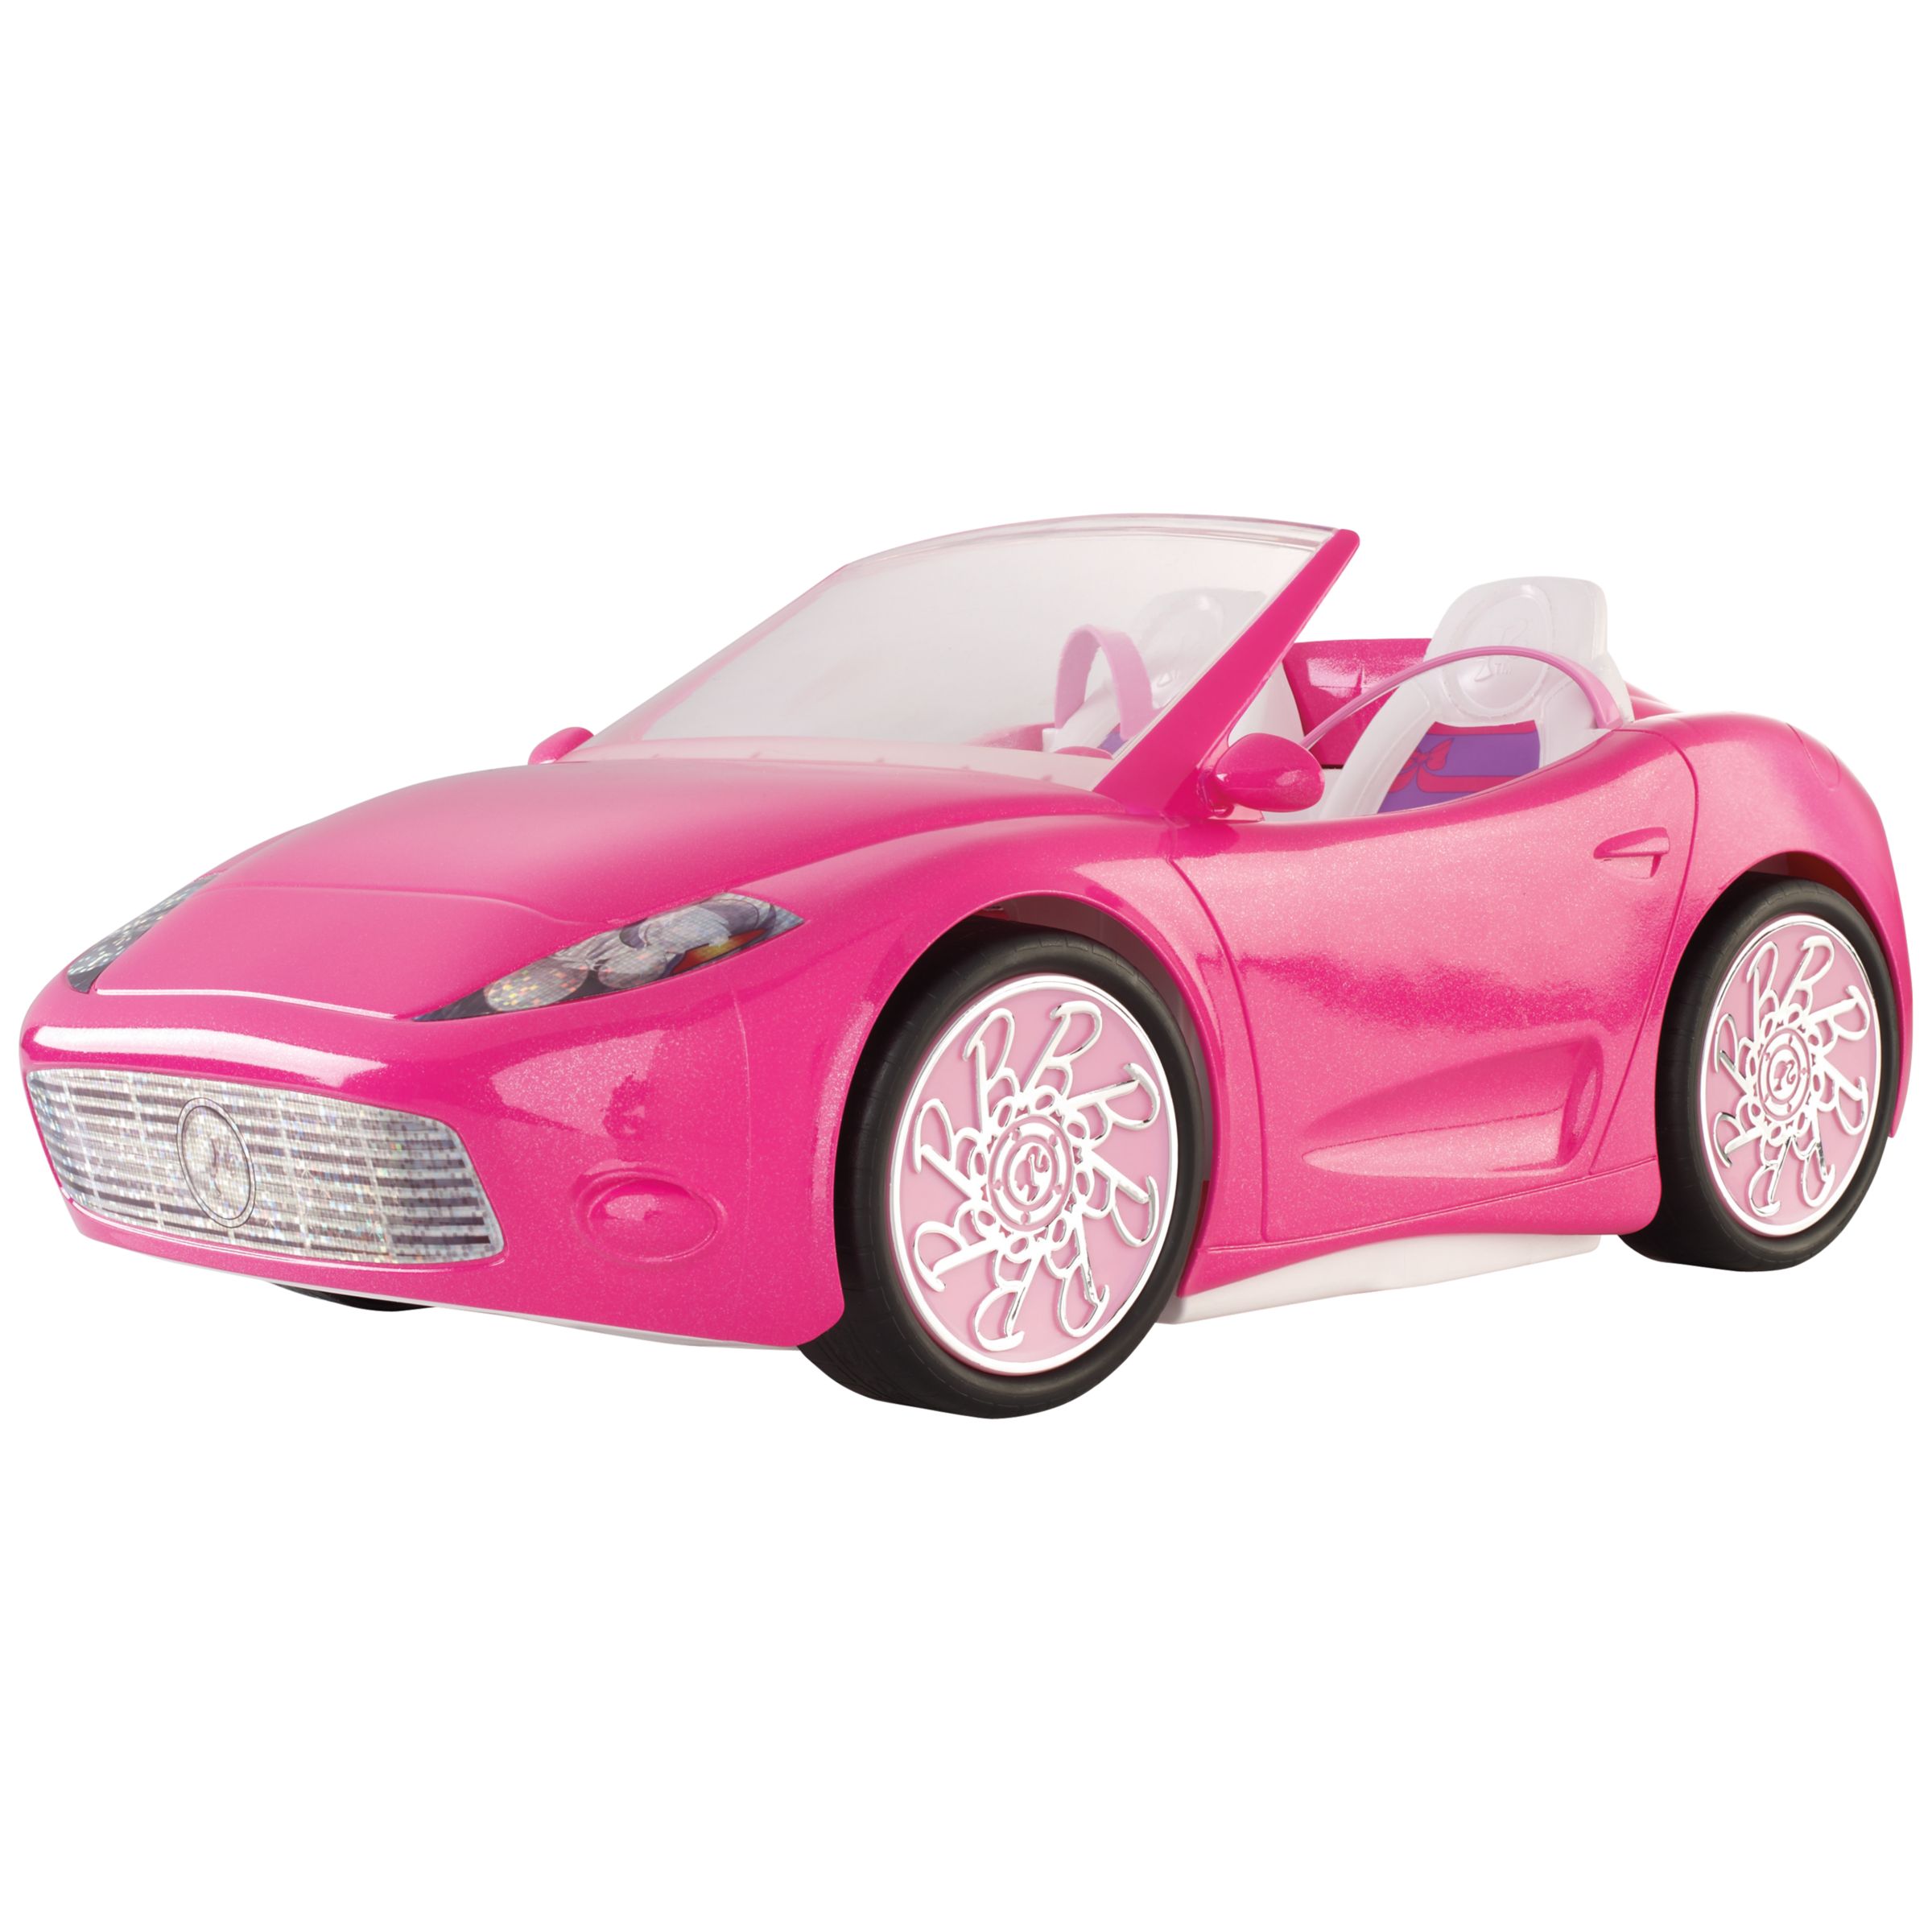 pink convertible doll stroller